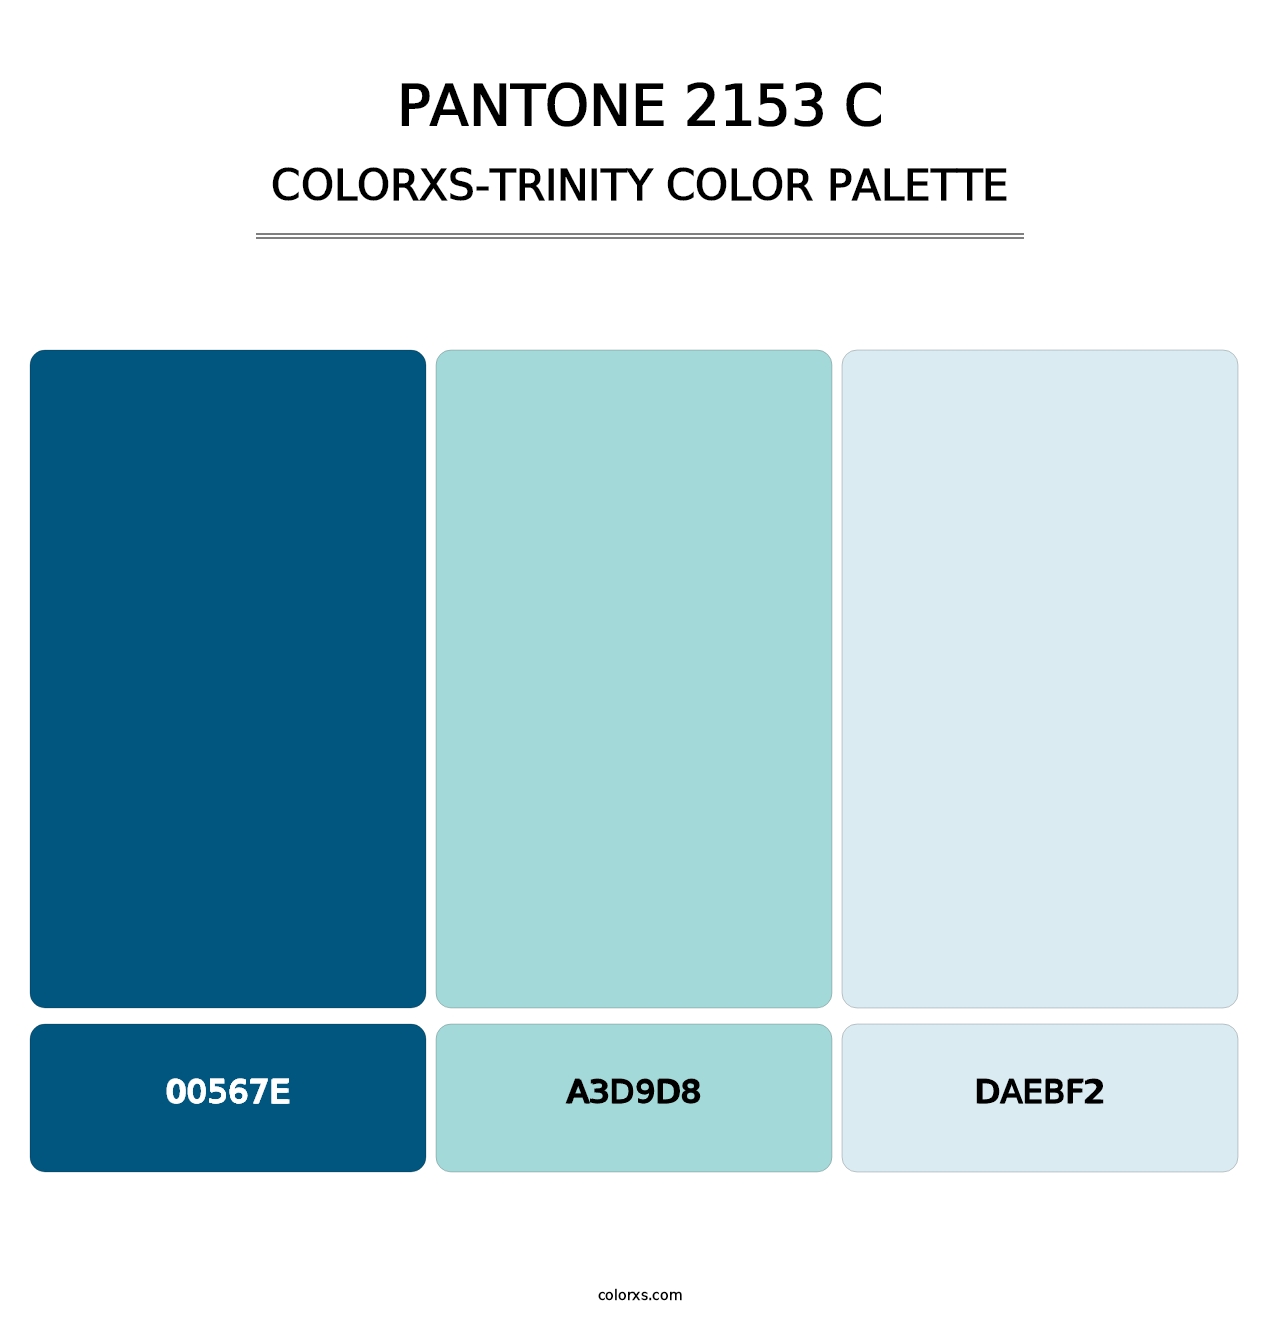 PANTONE 2153 C - Colorxs Trinity Palette